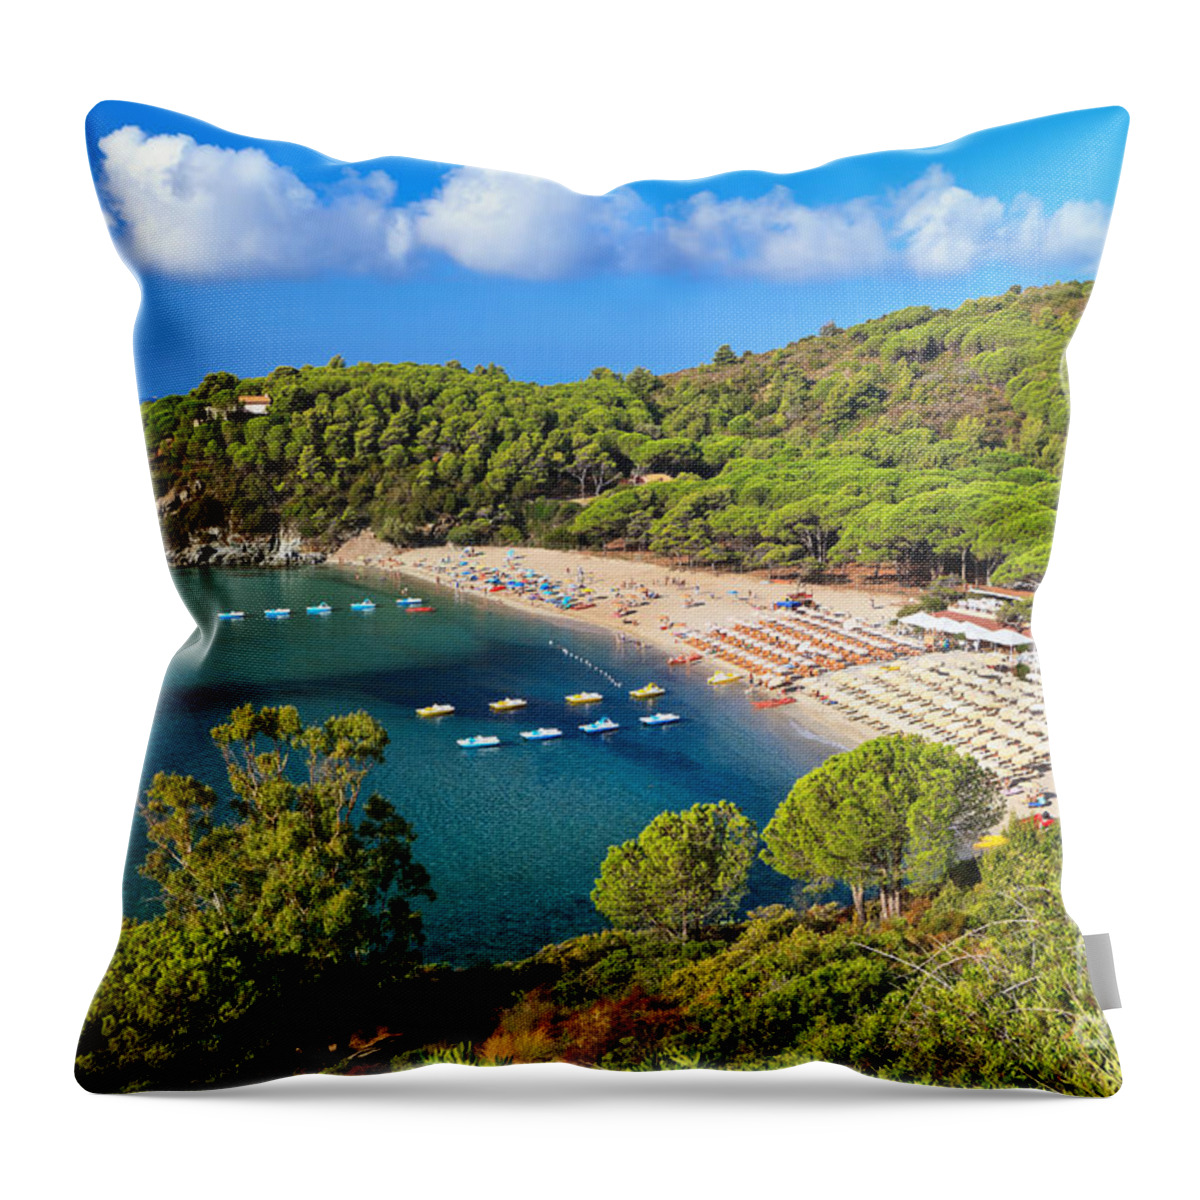 Tuscany Throw Pillow featuring the photograph Fetovaia beach - Elba island by Antonio Scarpi